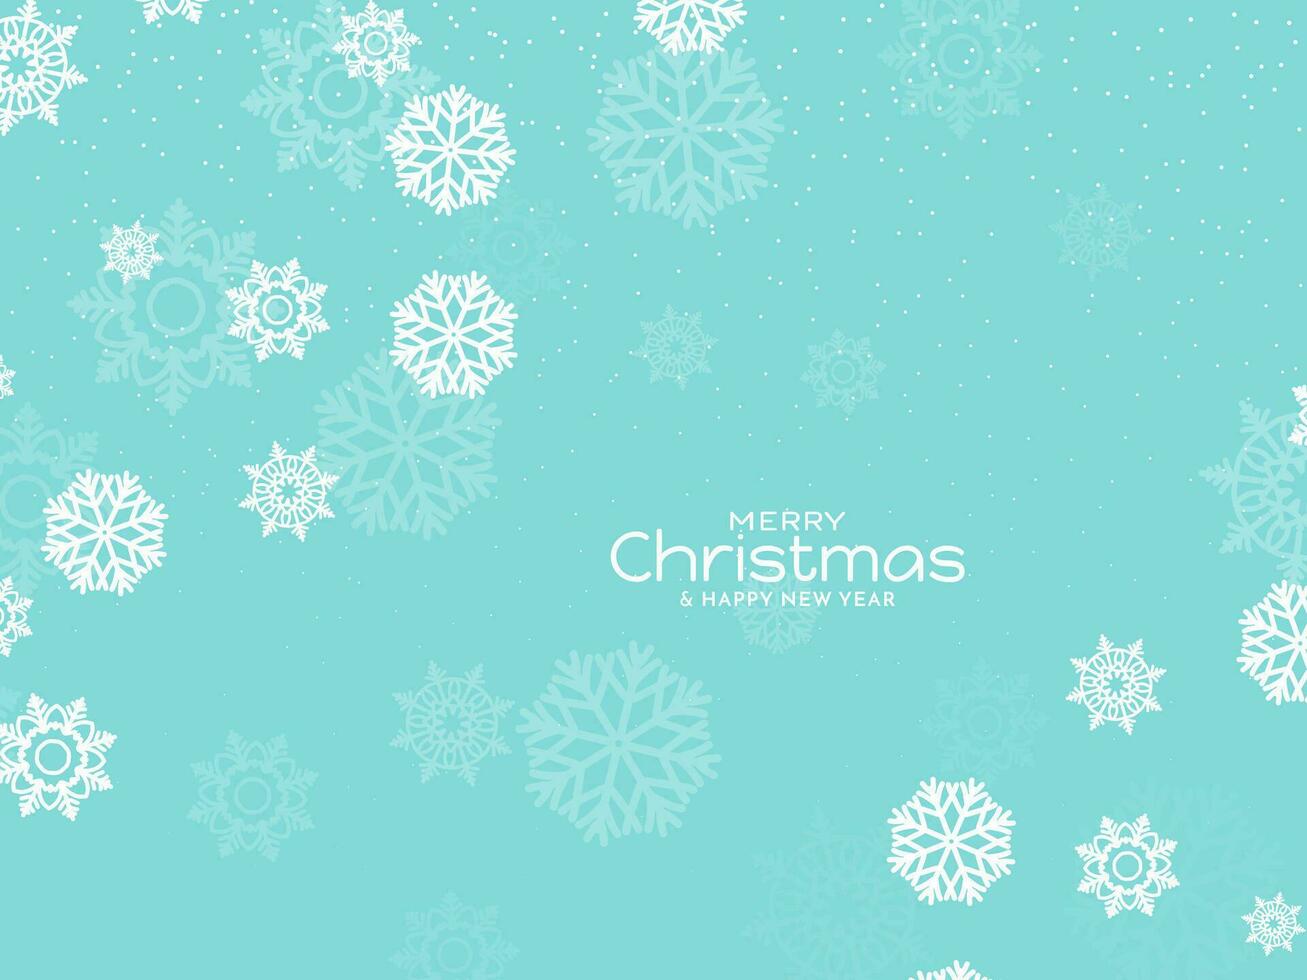 Modern Merry Christmas festival snowflakes decorative card design vector